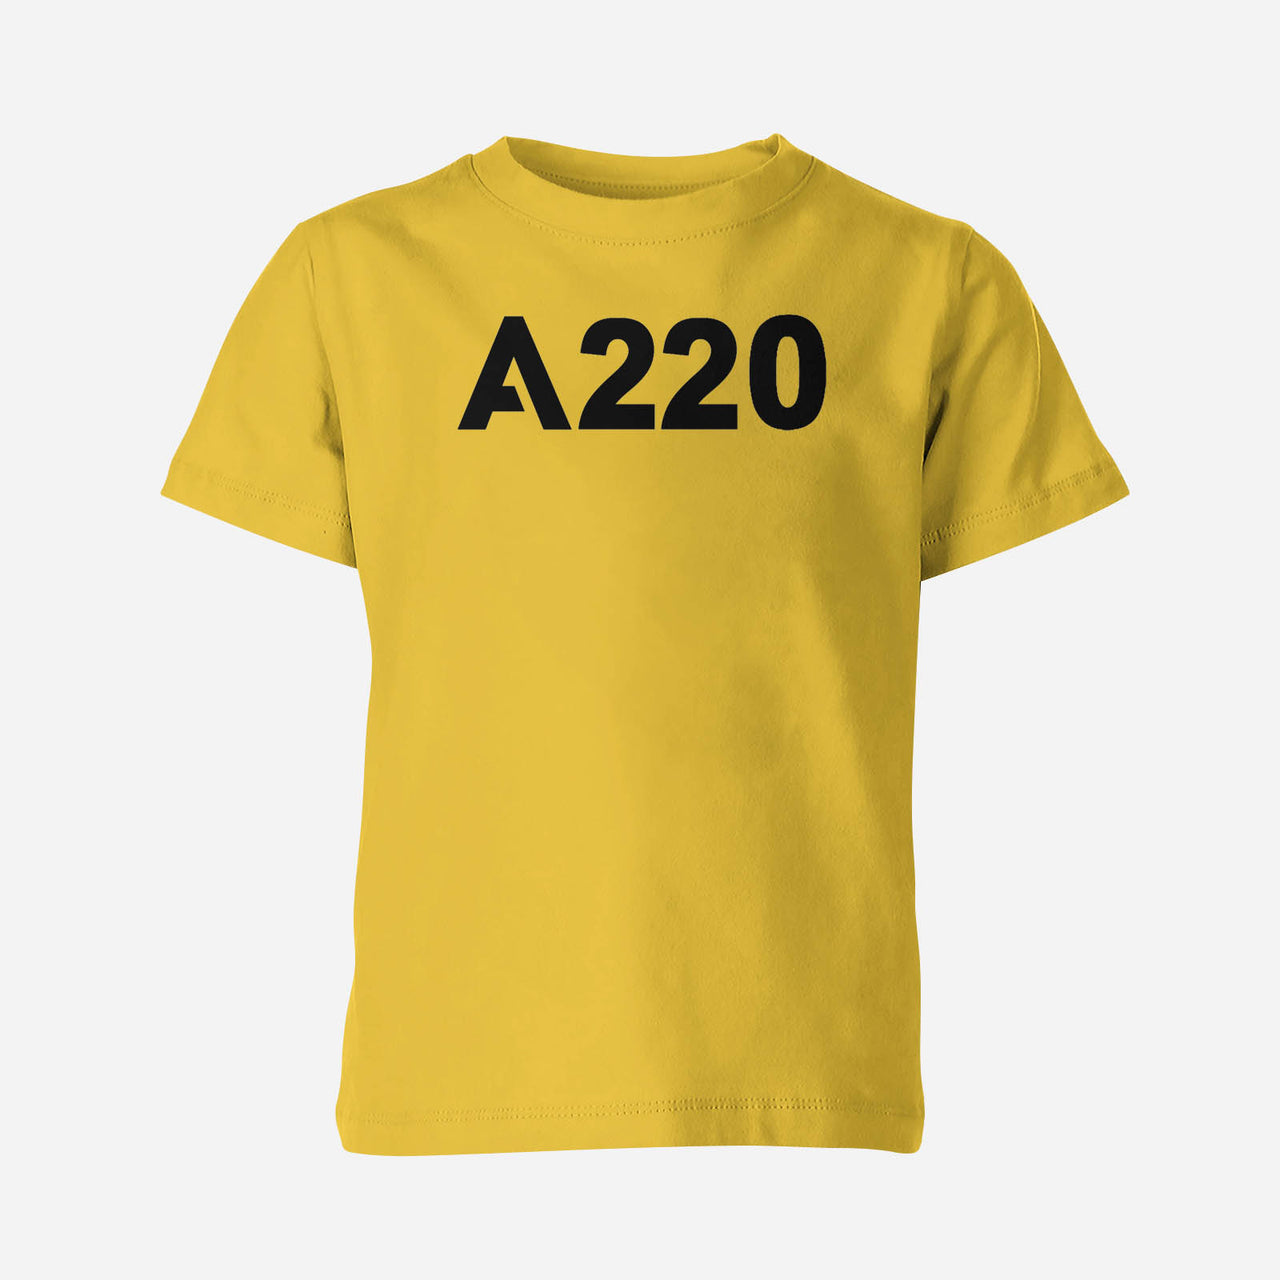 A220 Flat Designed Children T-Shirts